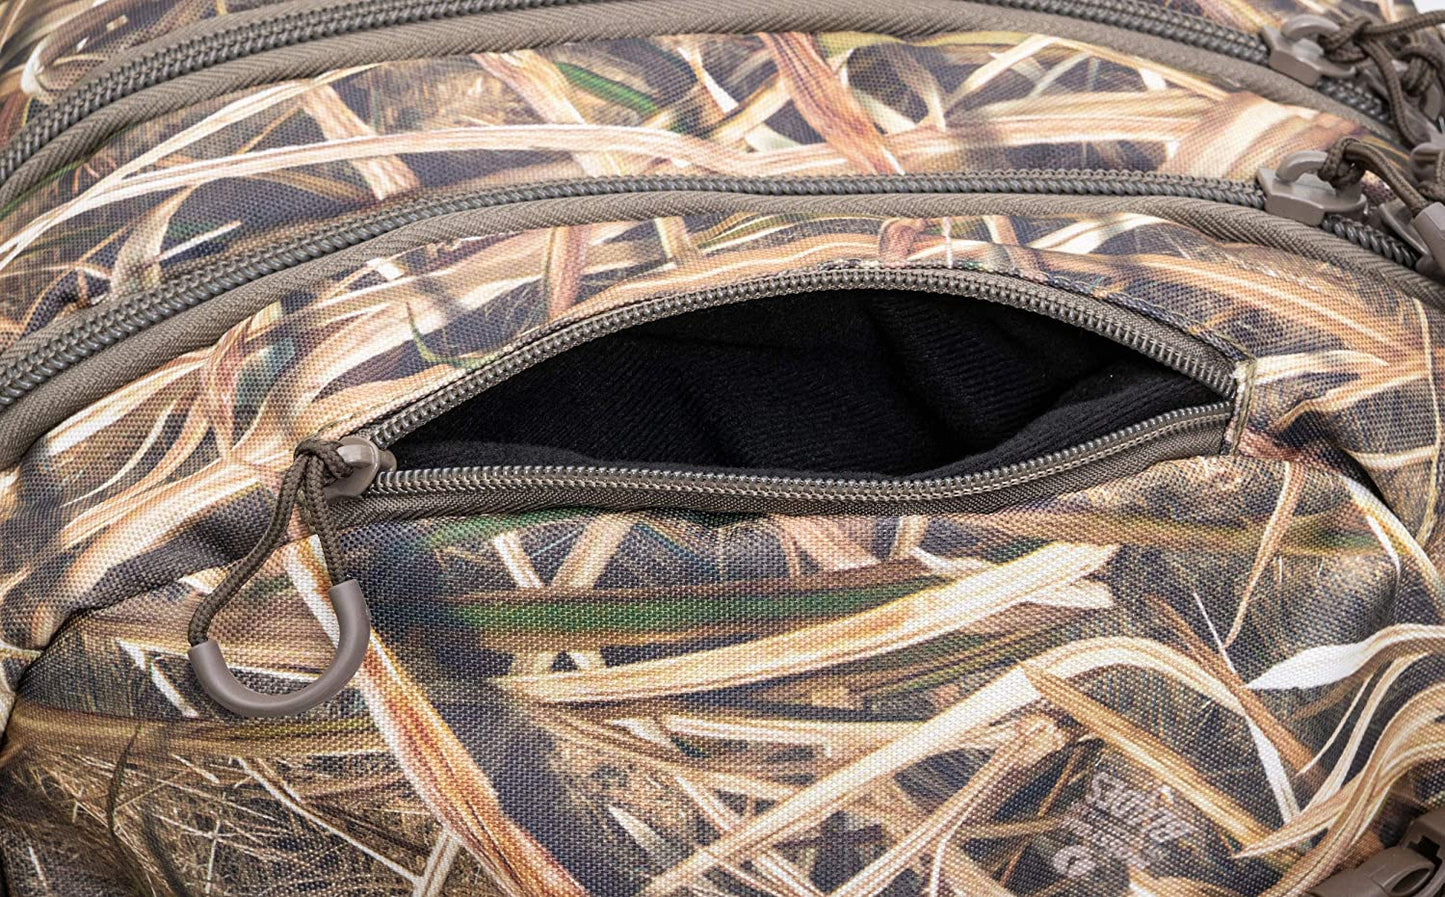 ALPS OutdoorZ Backpack Blind Bag, Realtree MAX-5 - AL9200131